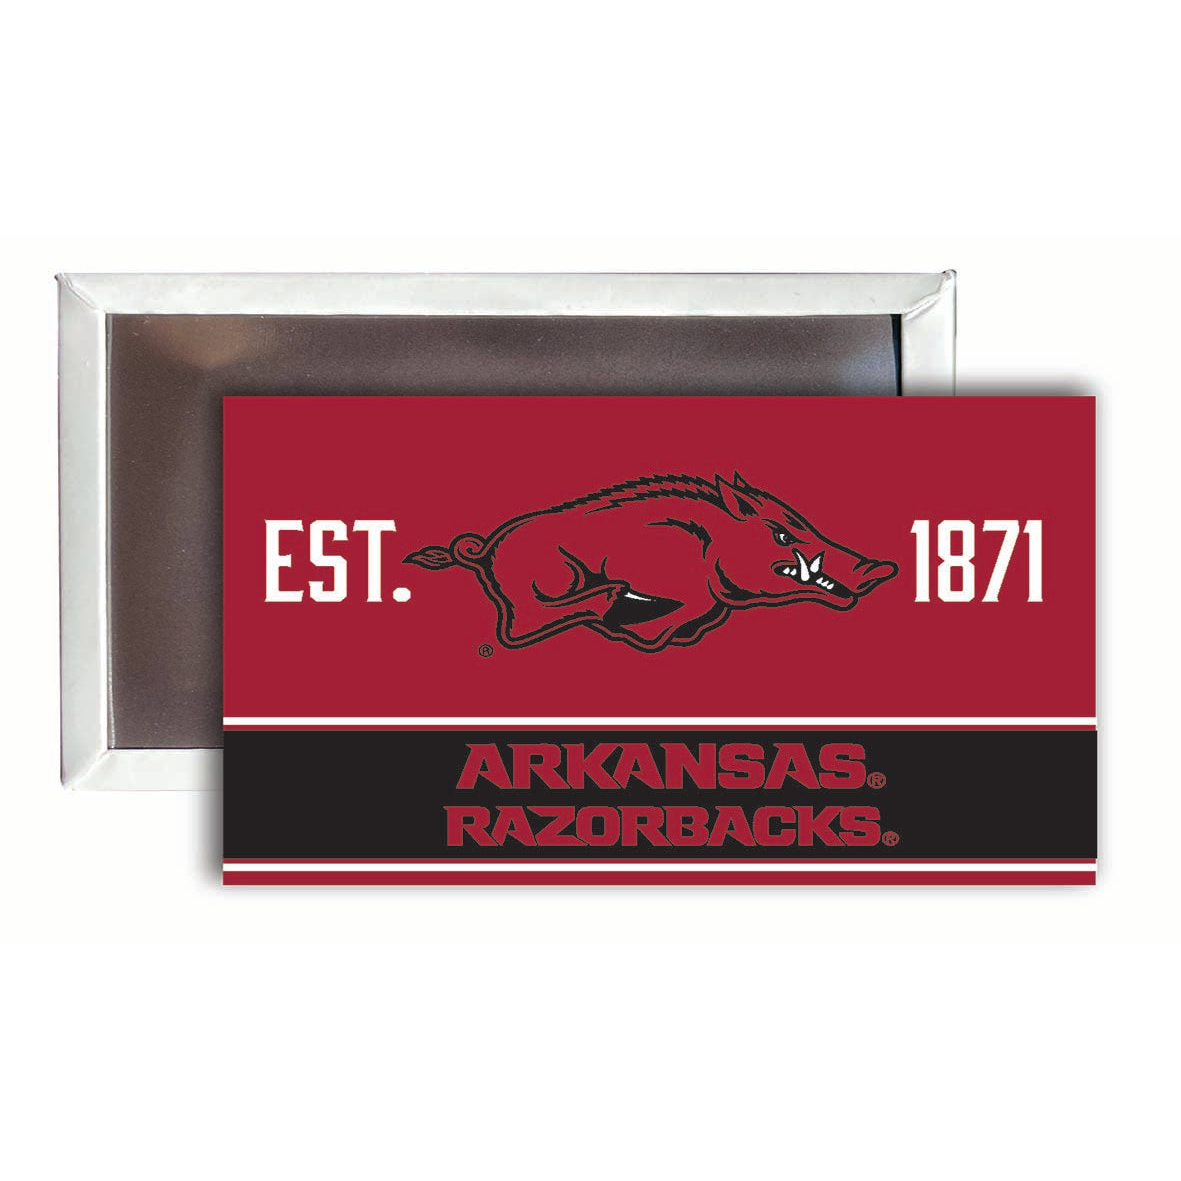 Arkansas Razorbacks 2x3-Inch Fridge Magnet